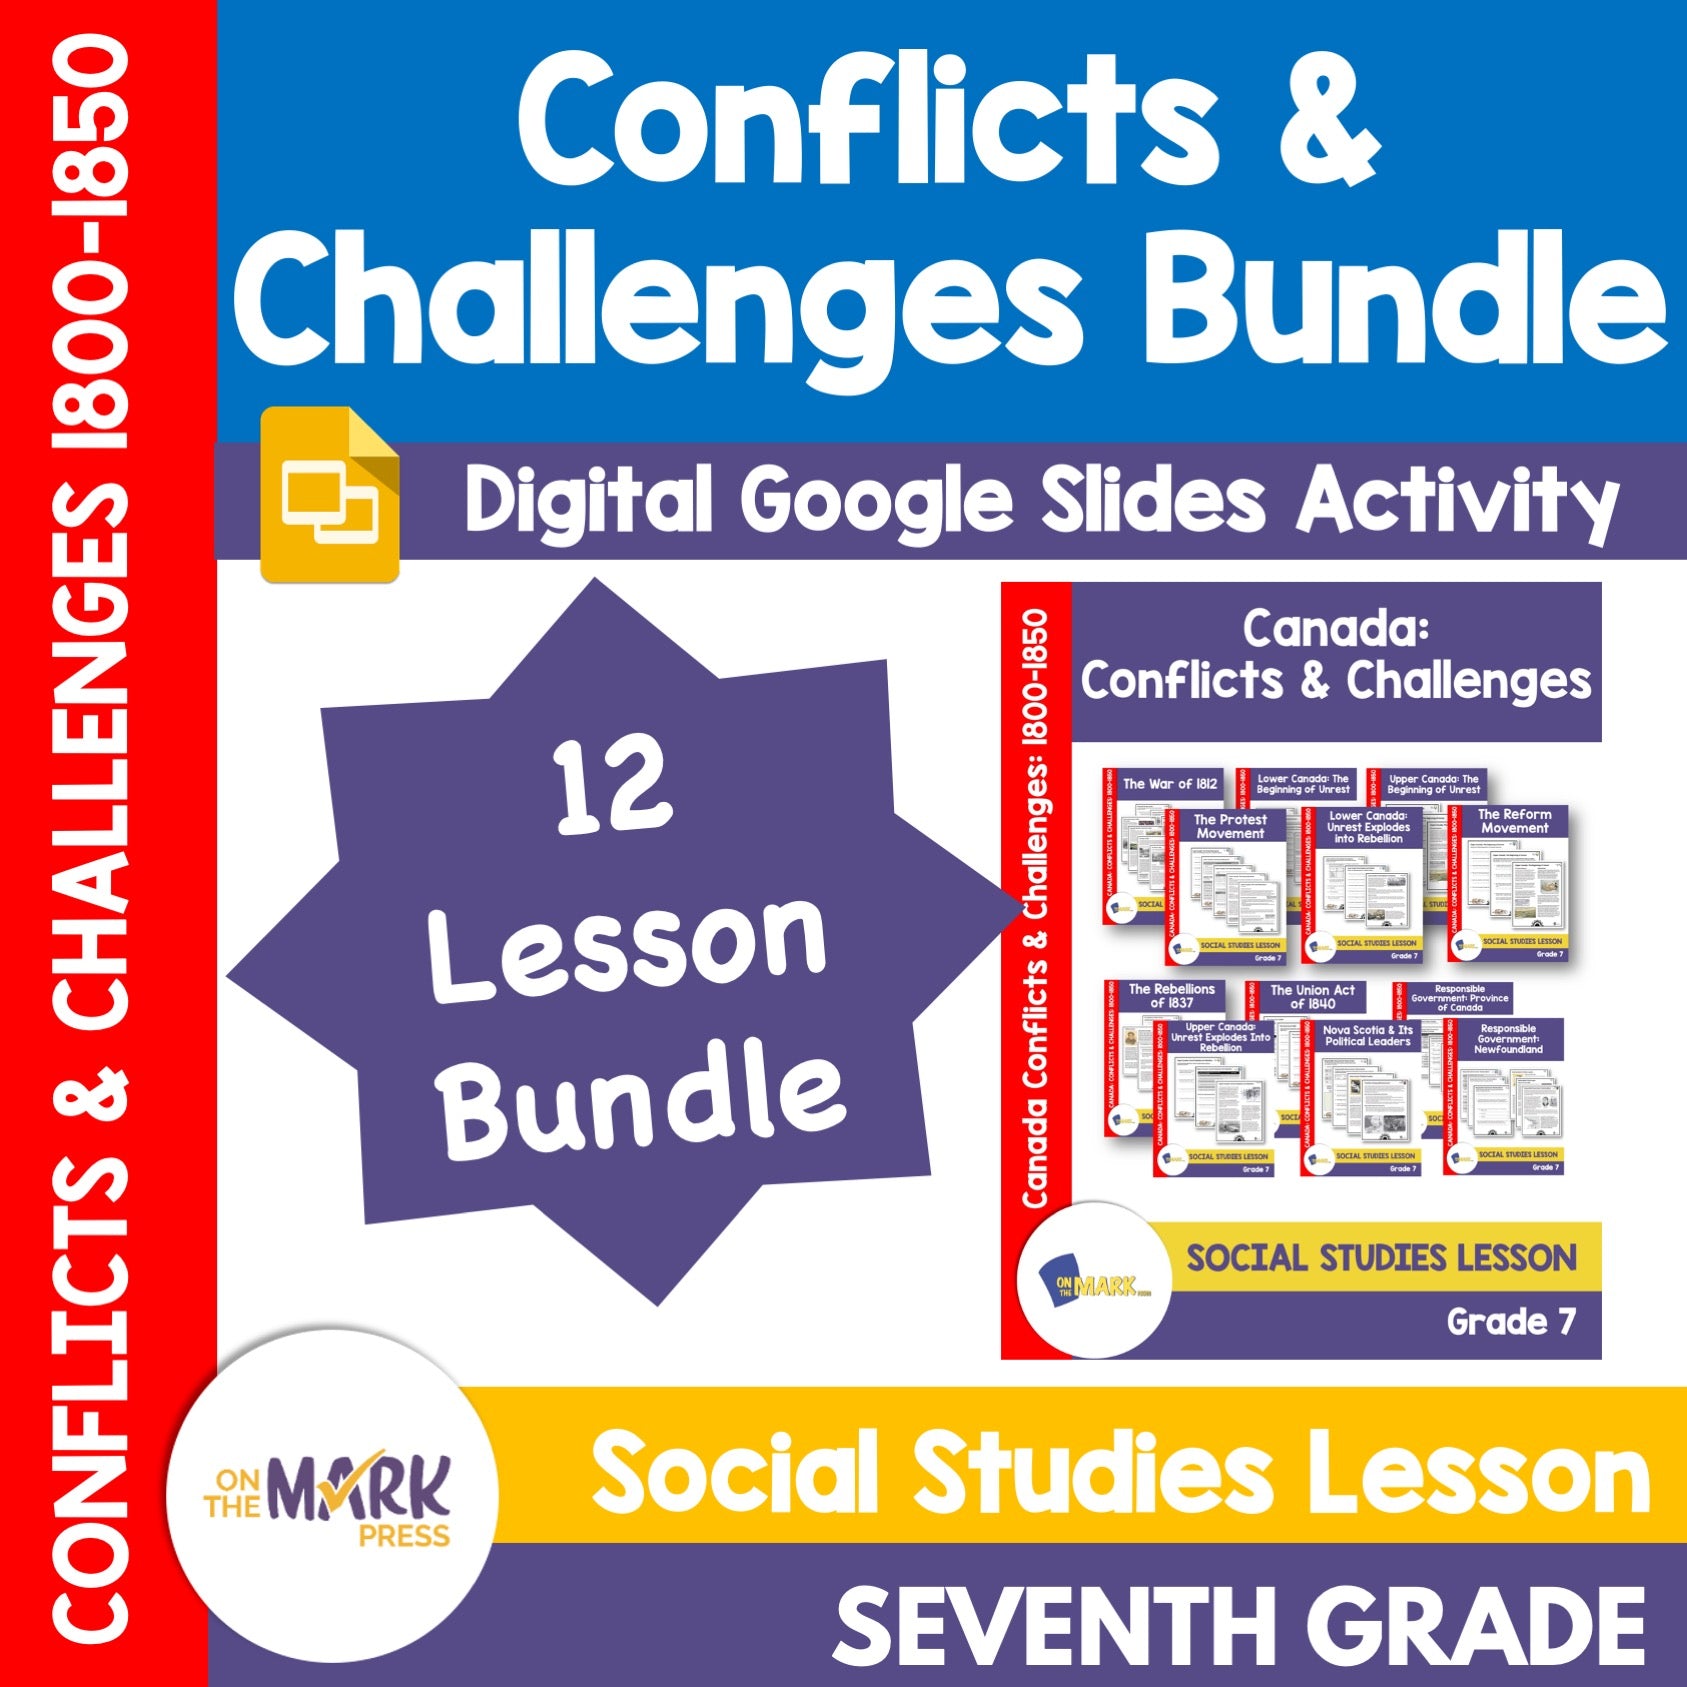 Conflict & Challenges of 1800-1850, 12 Lesson Google Slides & Printables Bundle Grade 7